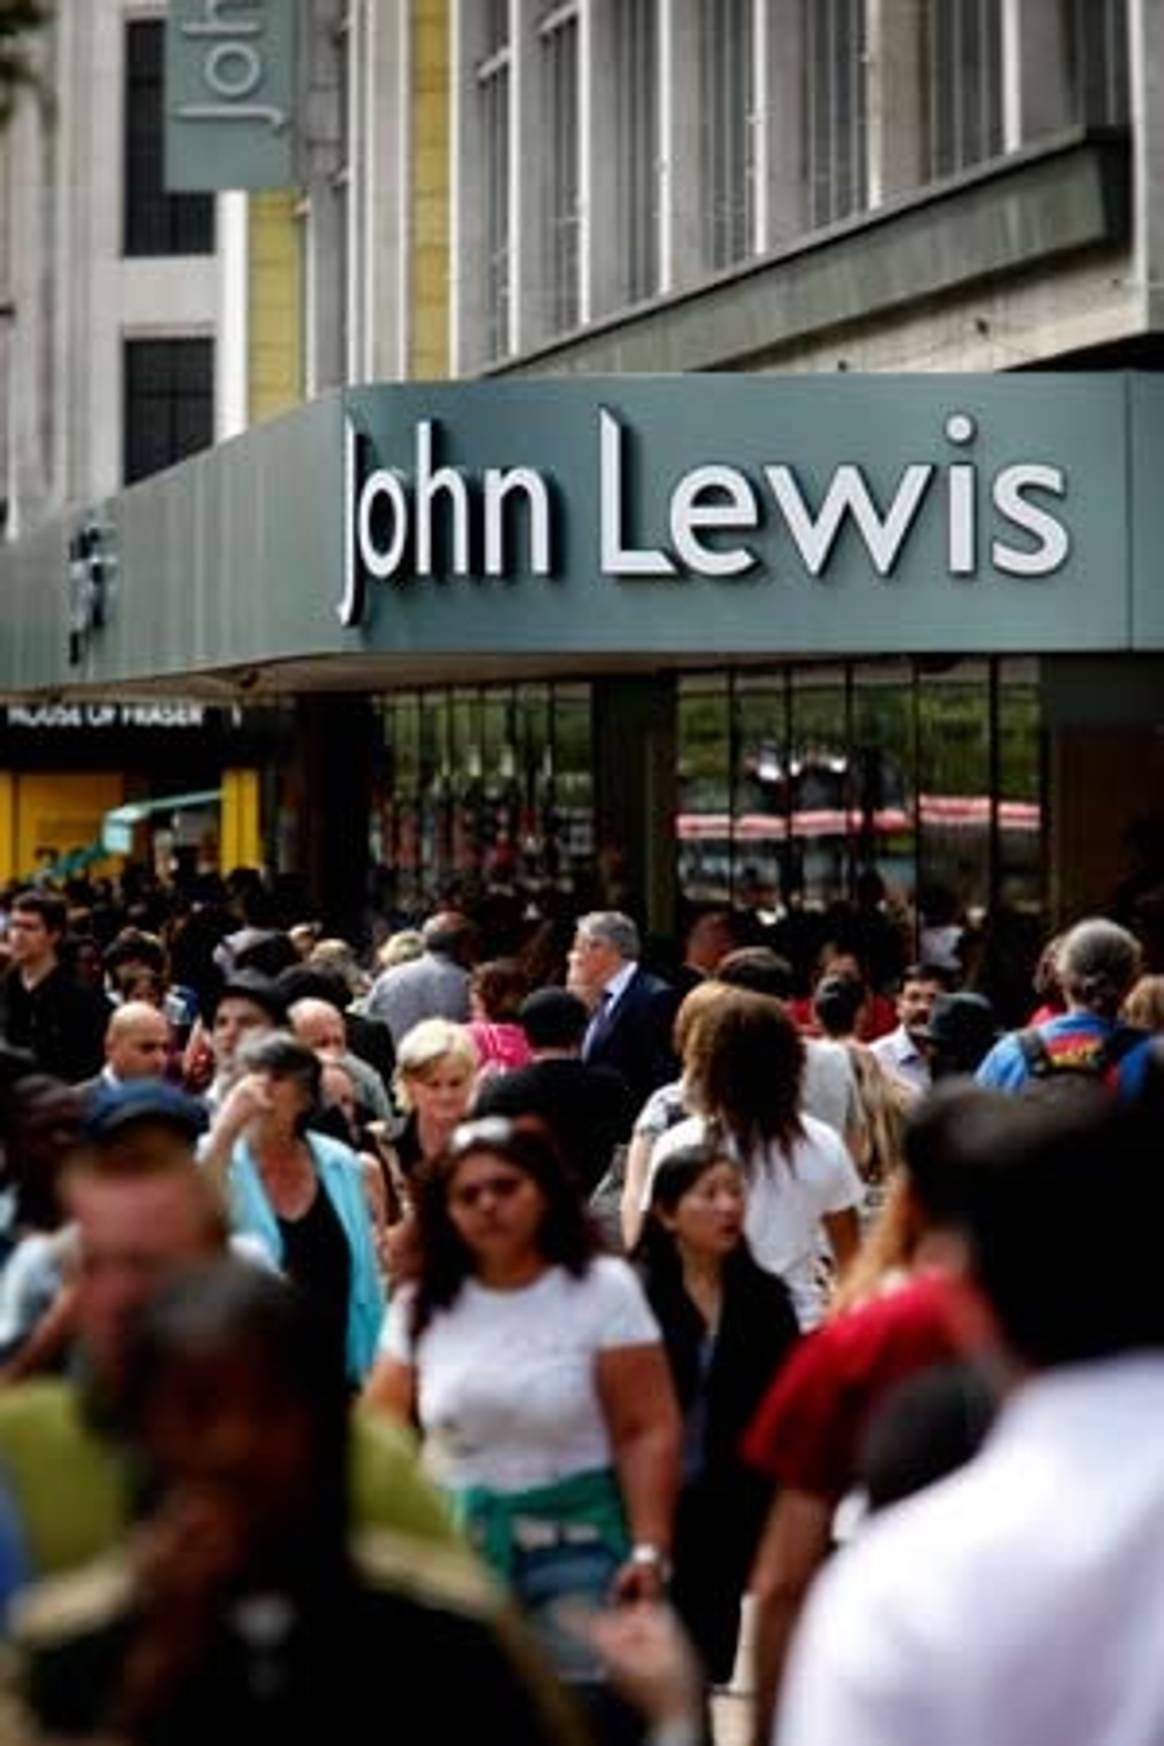 Unpaid staff costs John Lewis 40 million pounds